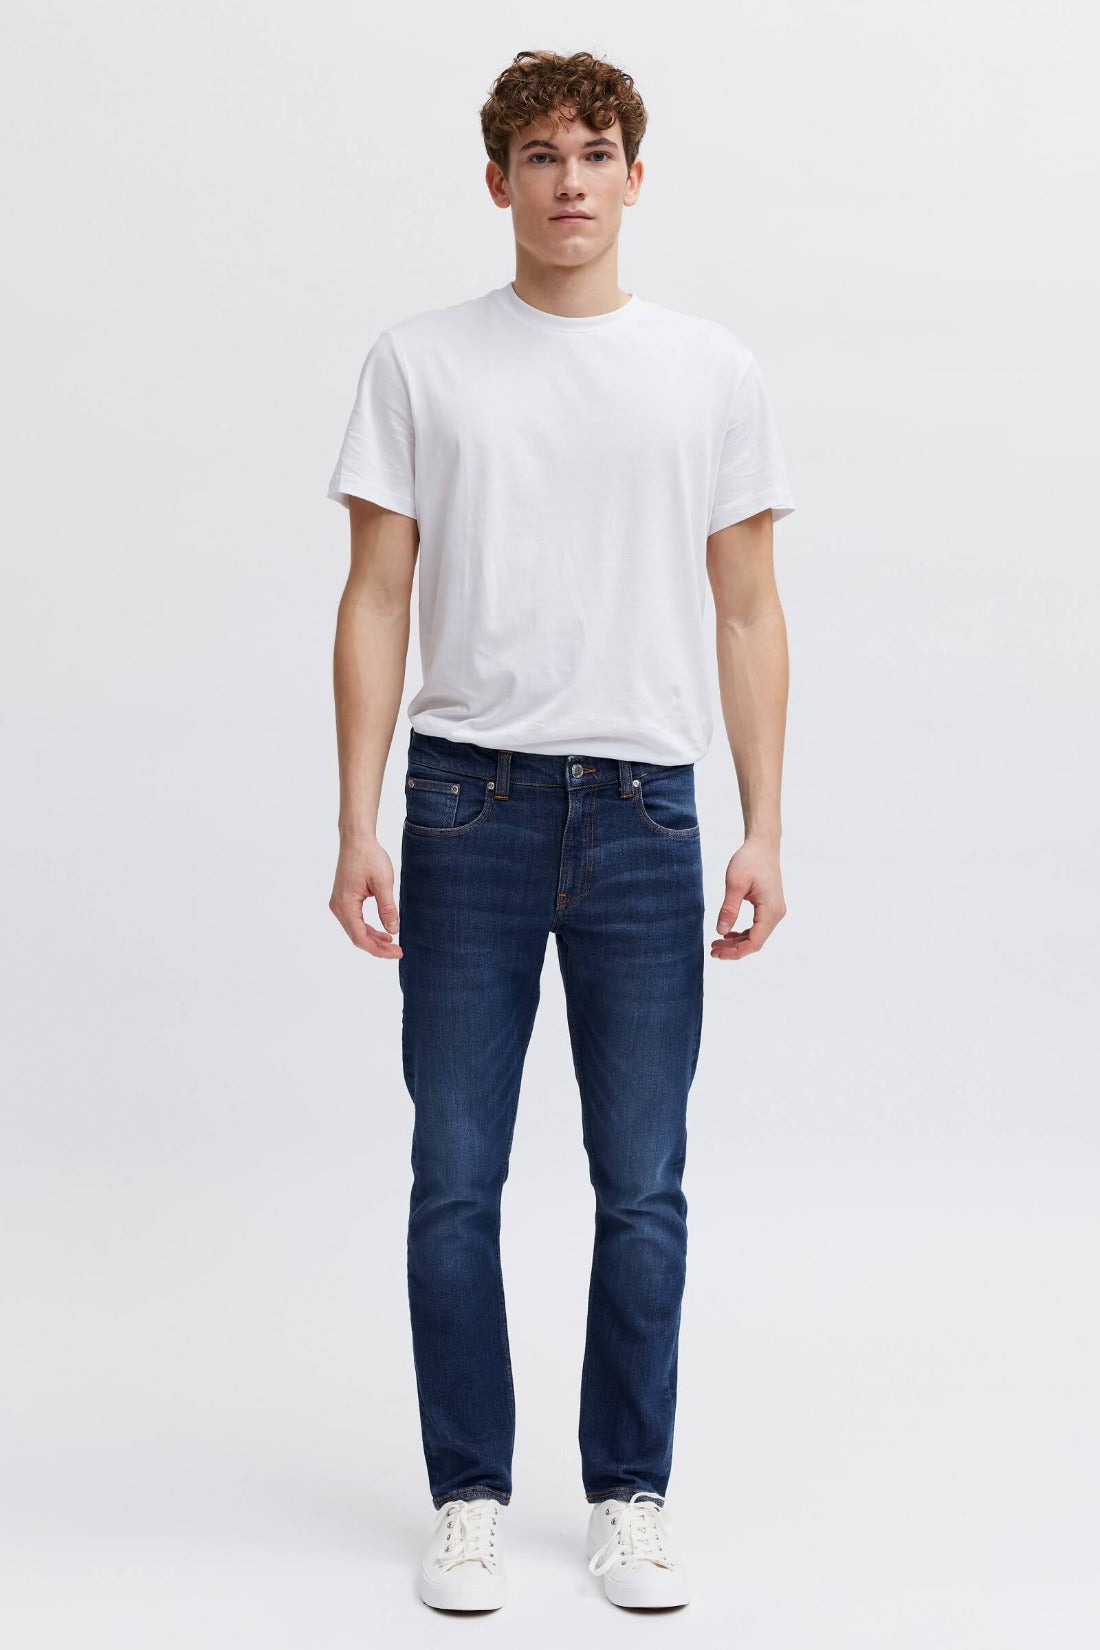 organic denim, must have jeans for men